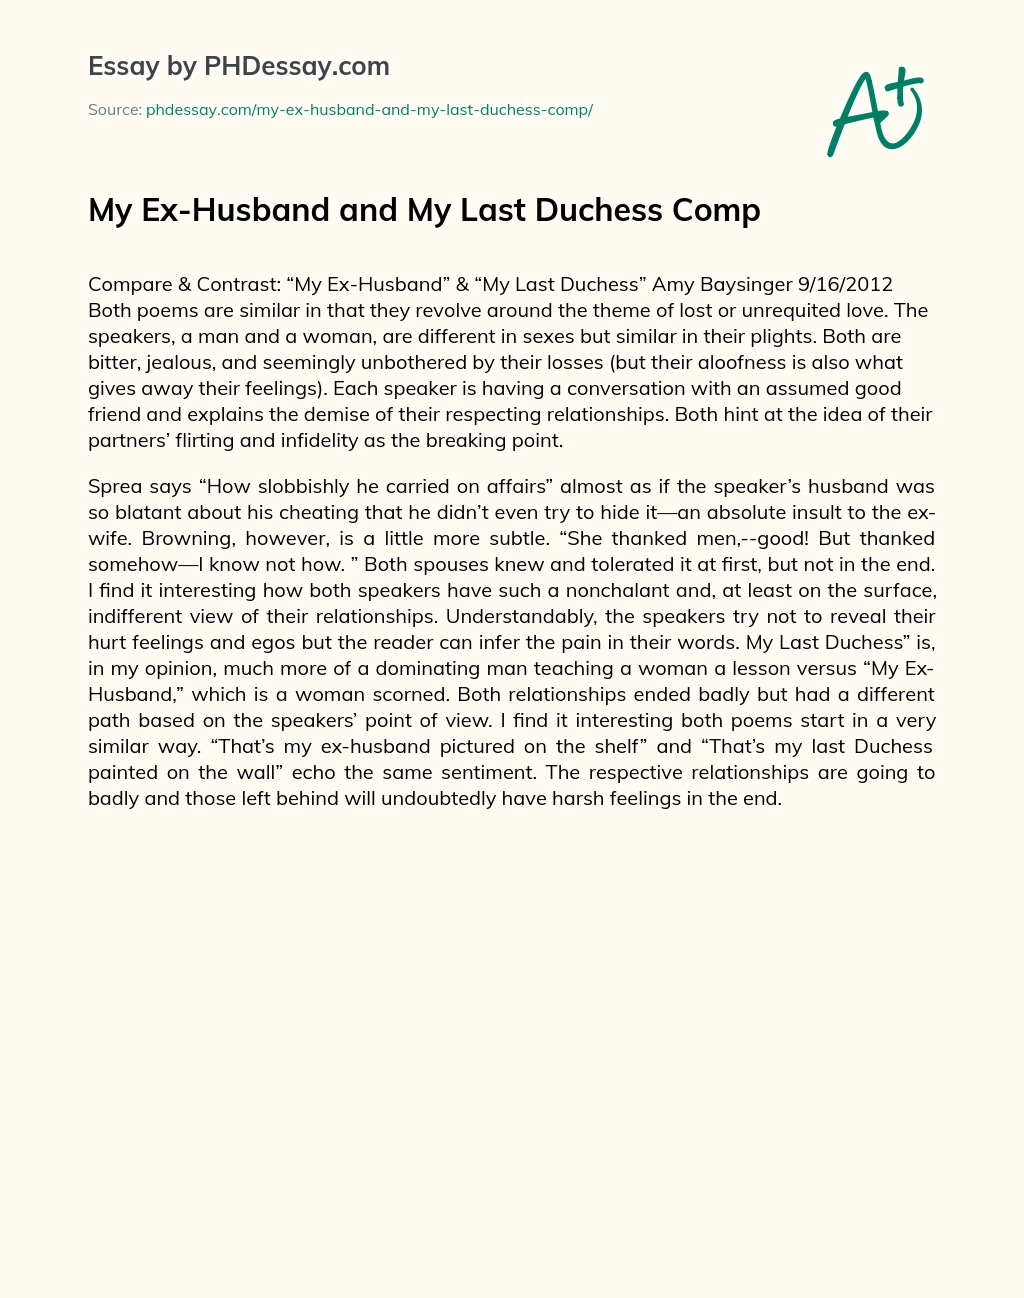 My Ex-Husband and My Last Duchess Comp essay